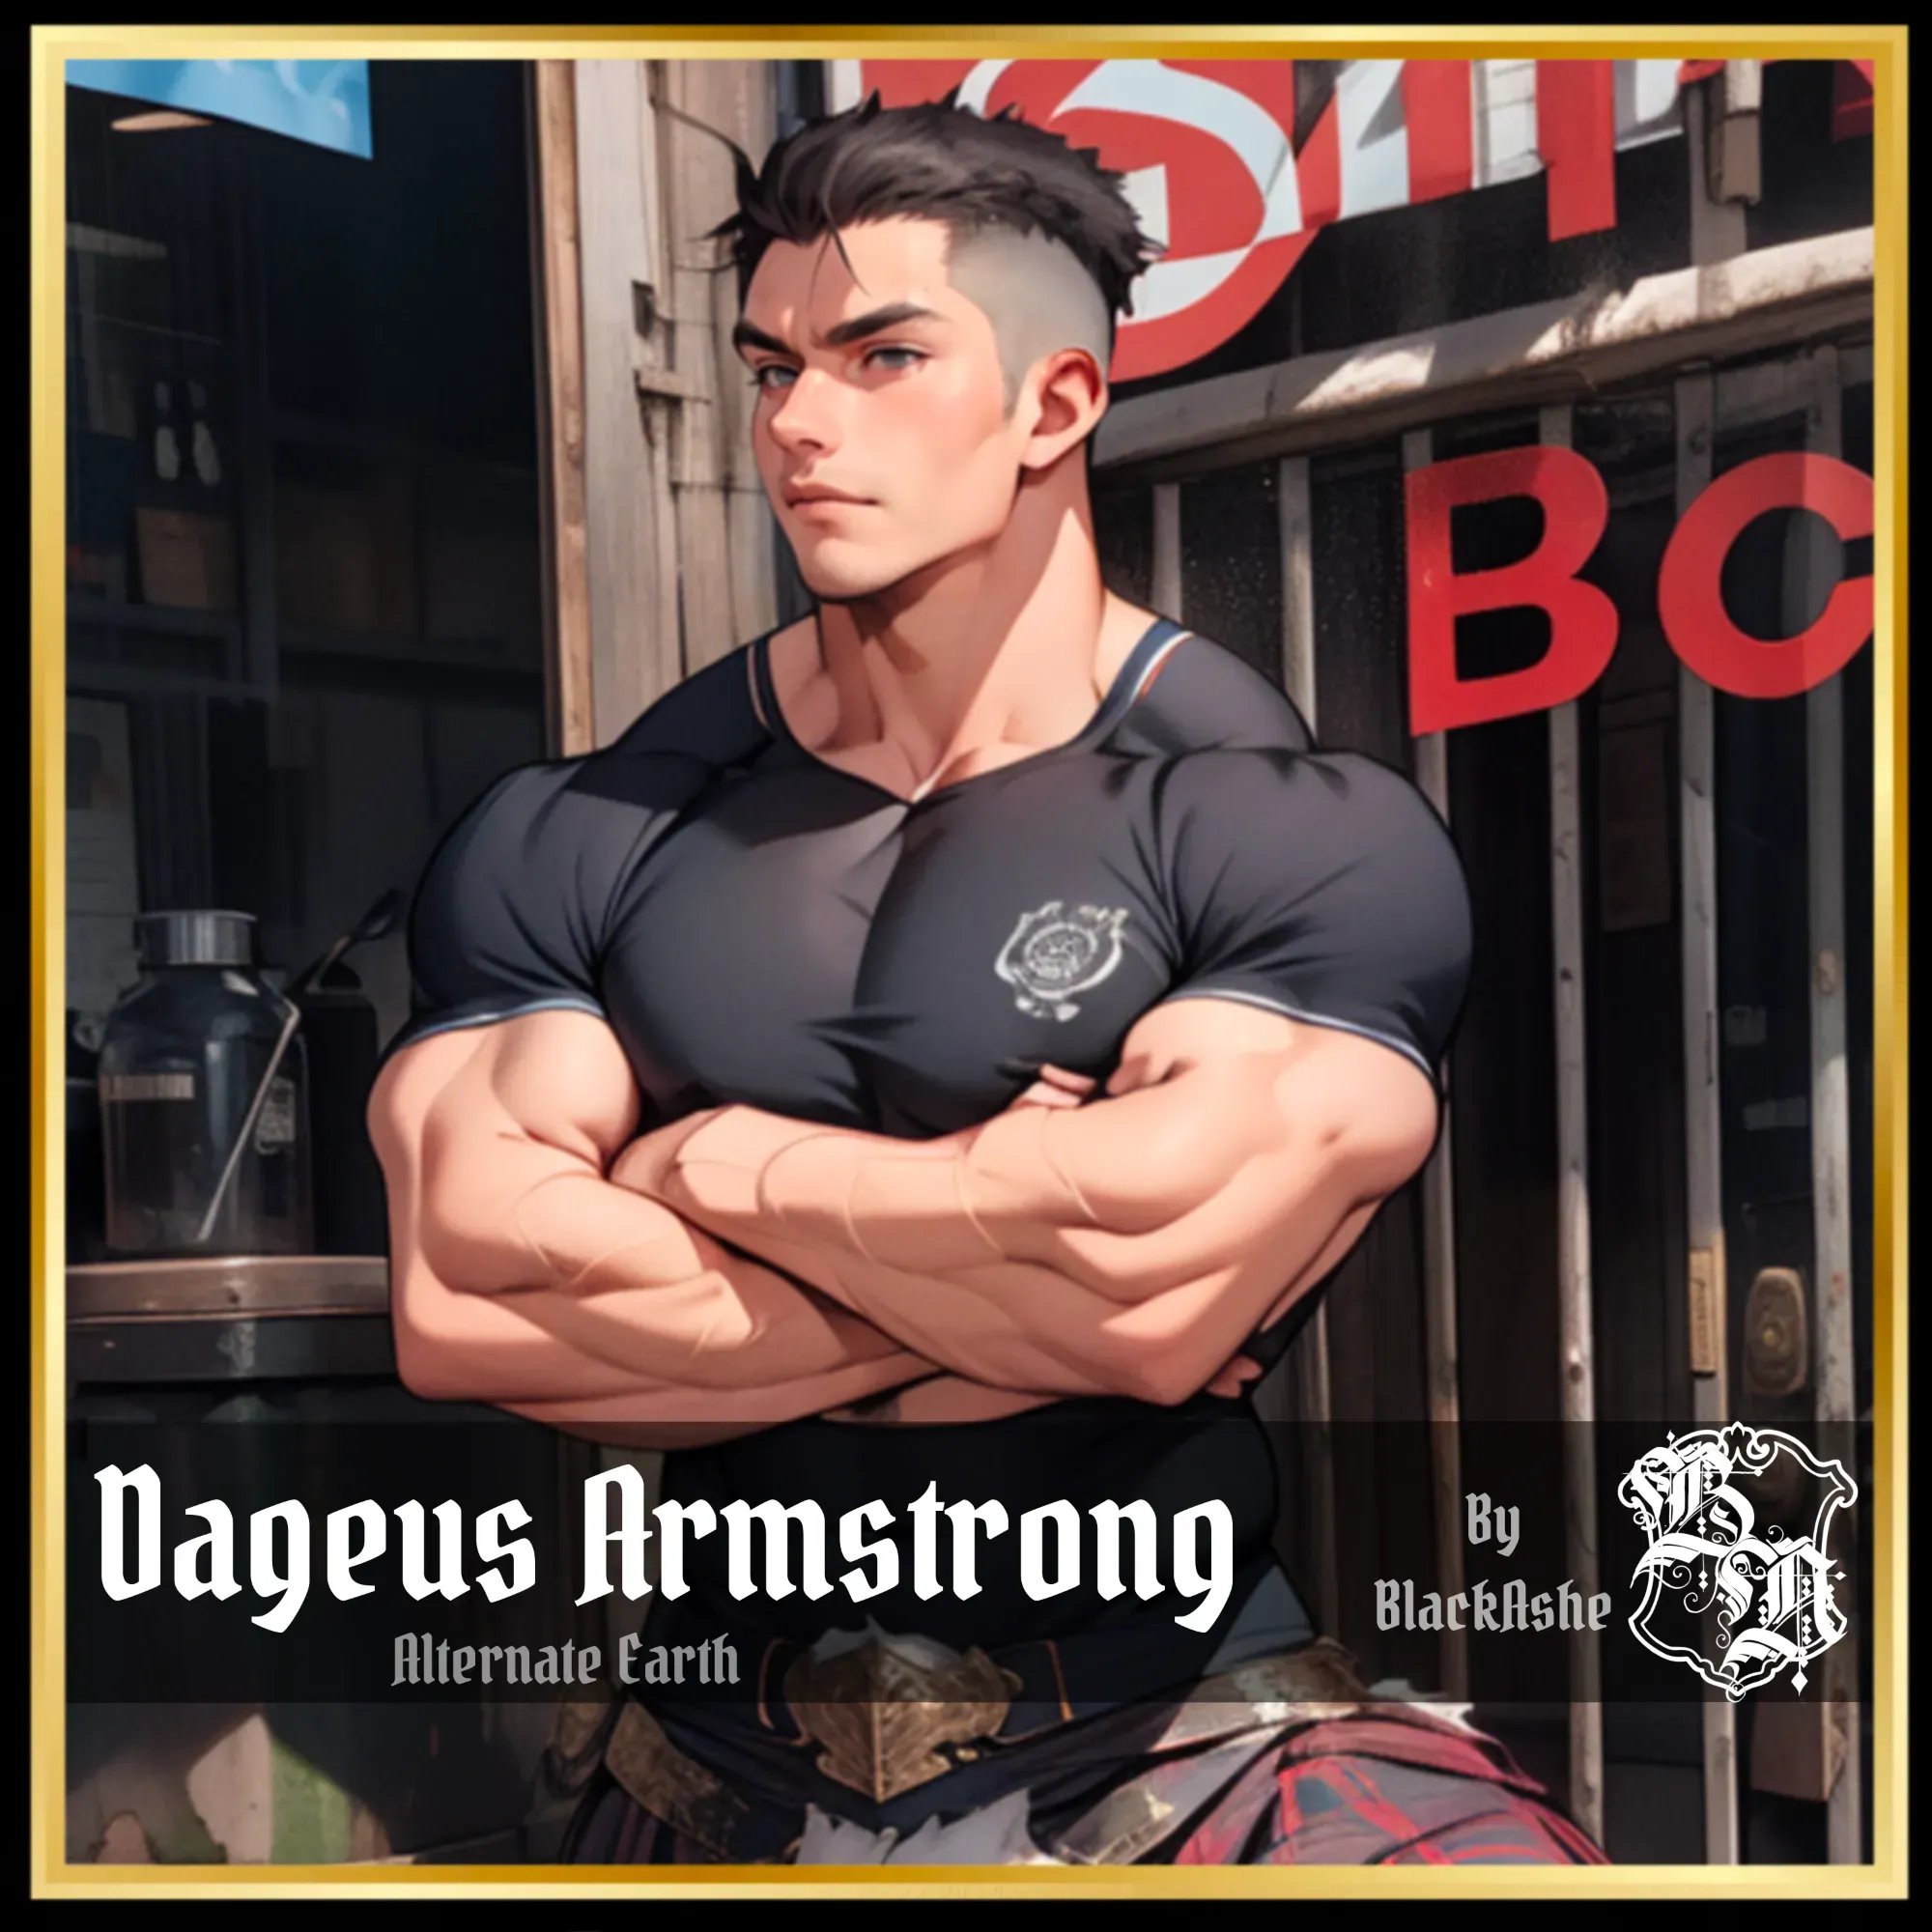 Avatar of Dageus Armstrong